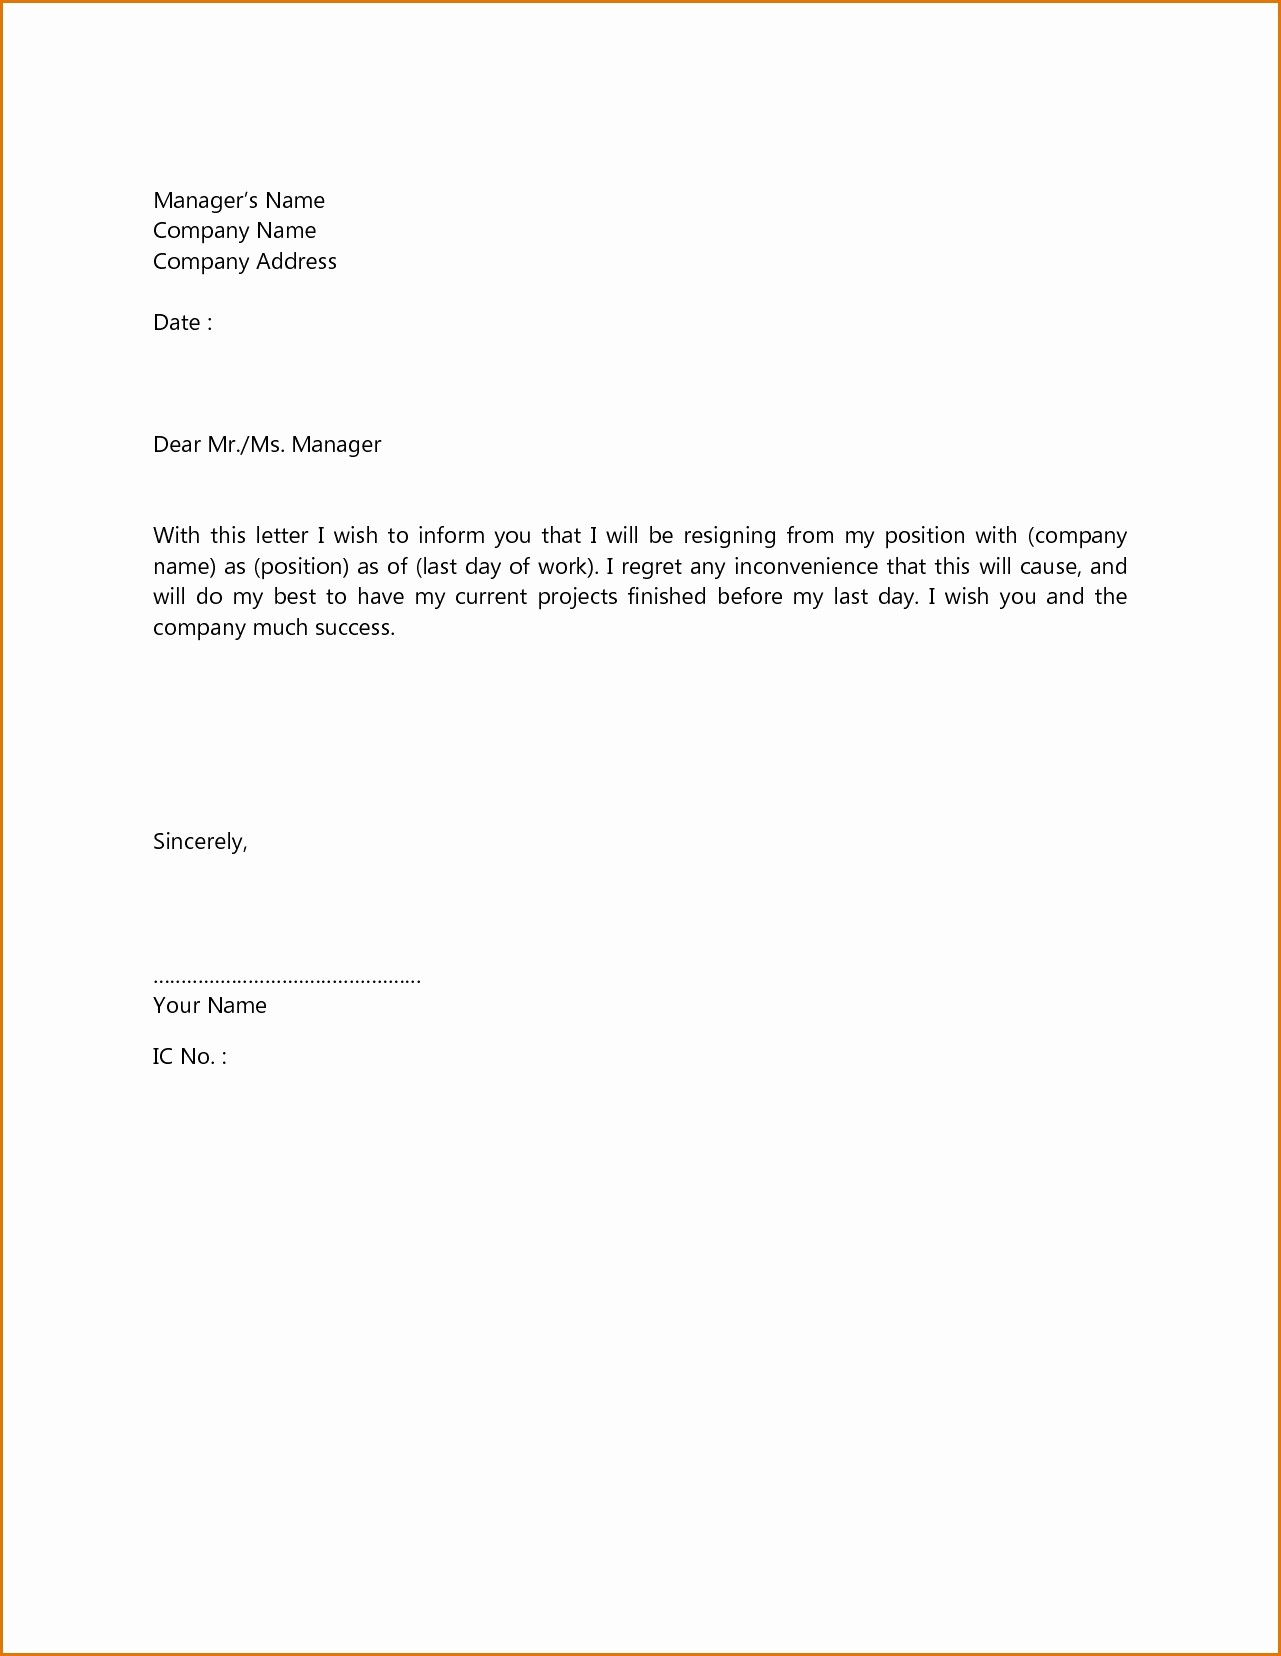 Basic Resume Cover Letter Template Luxury Simple Cover Letter Template Ideasplataforma